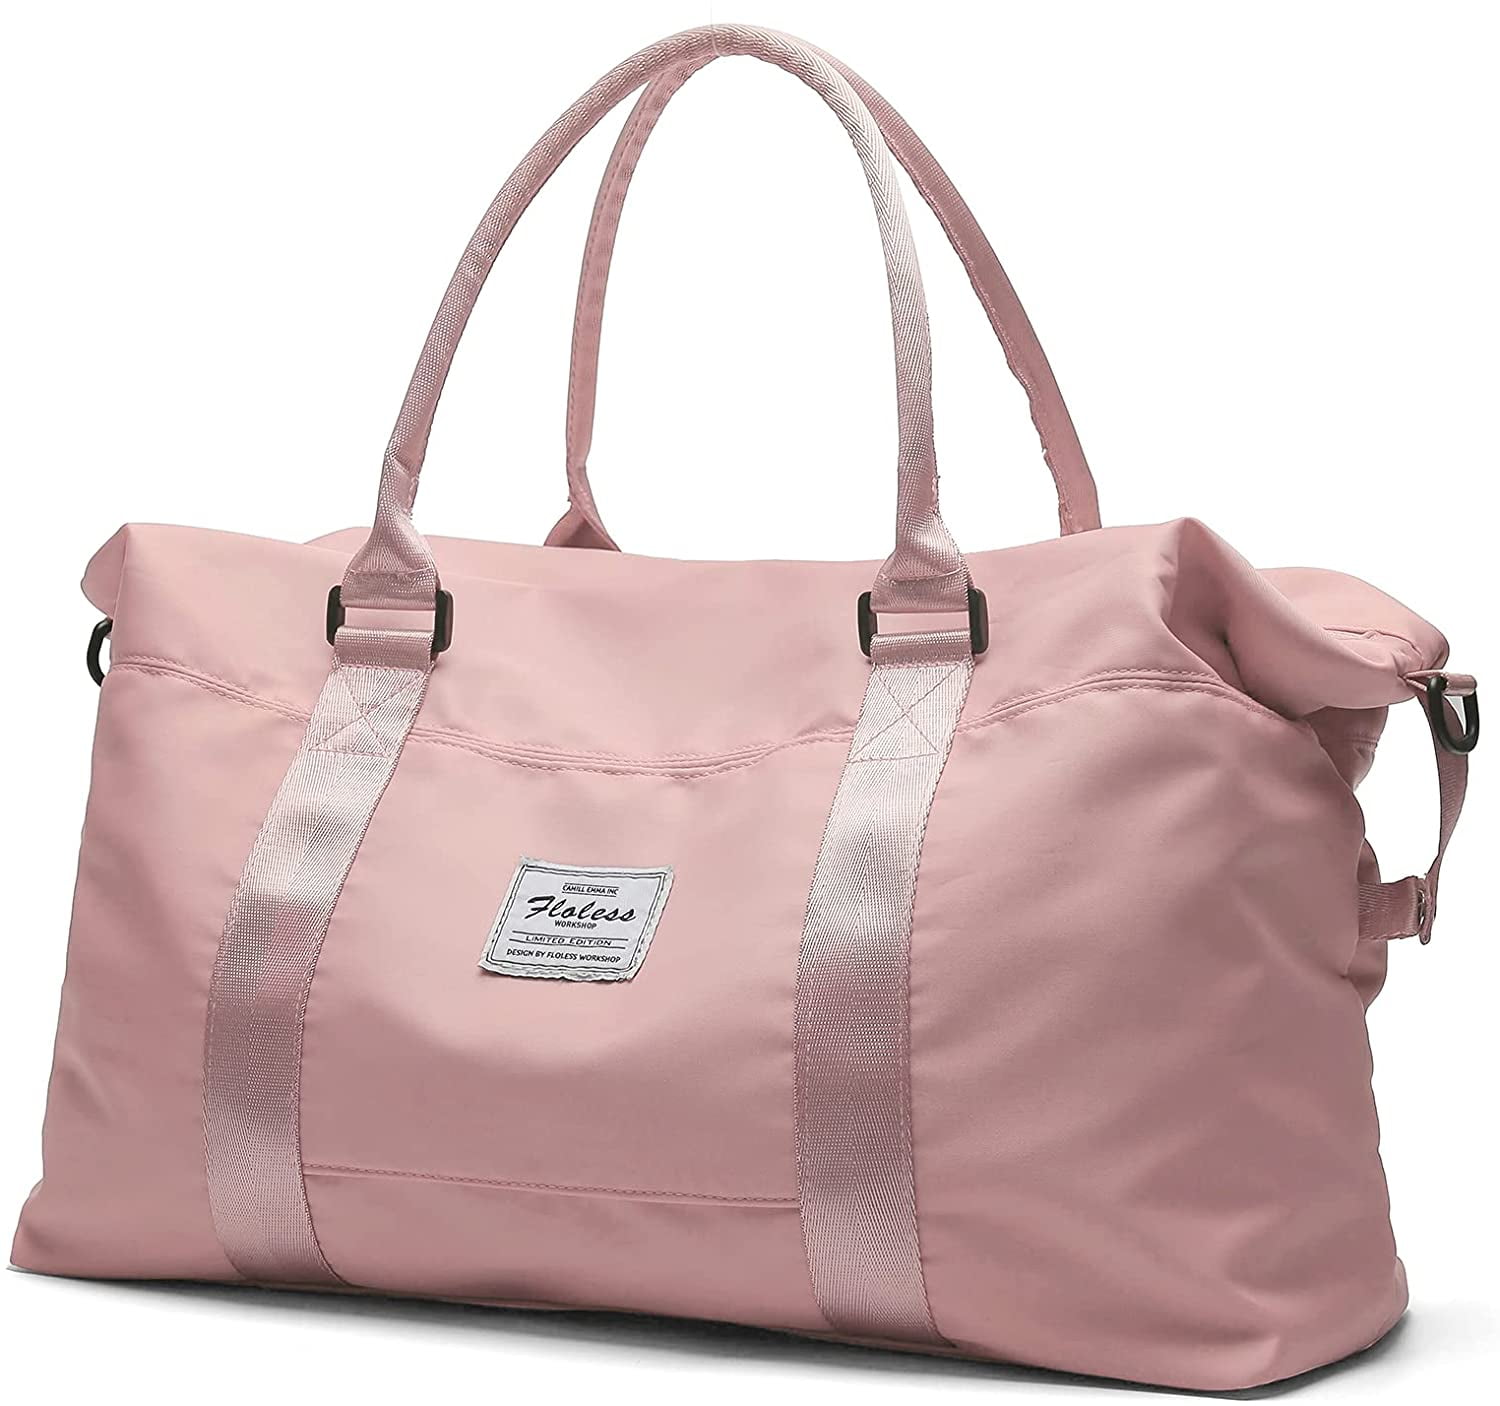 XGeek Travel Duffel Bag Sports Gym Bag for Women Carry on Weekender ...